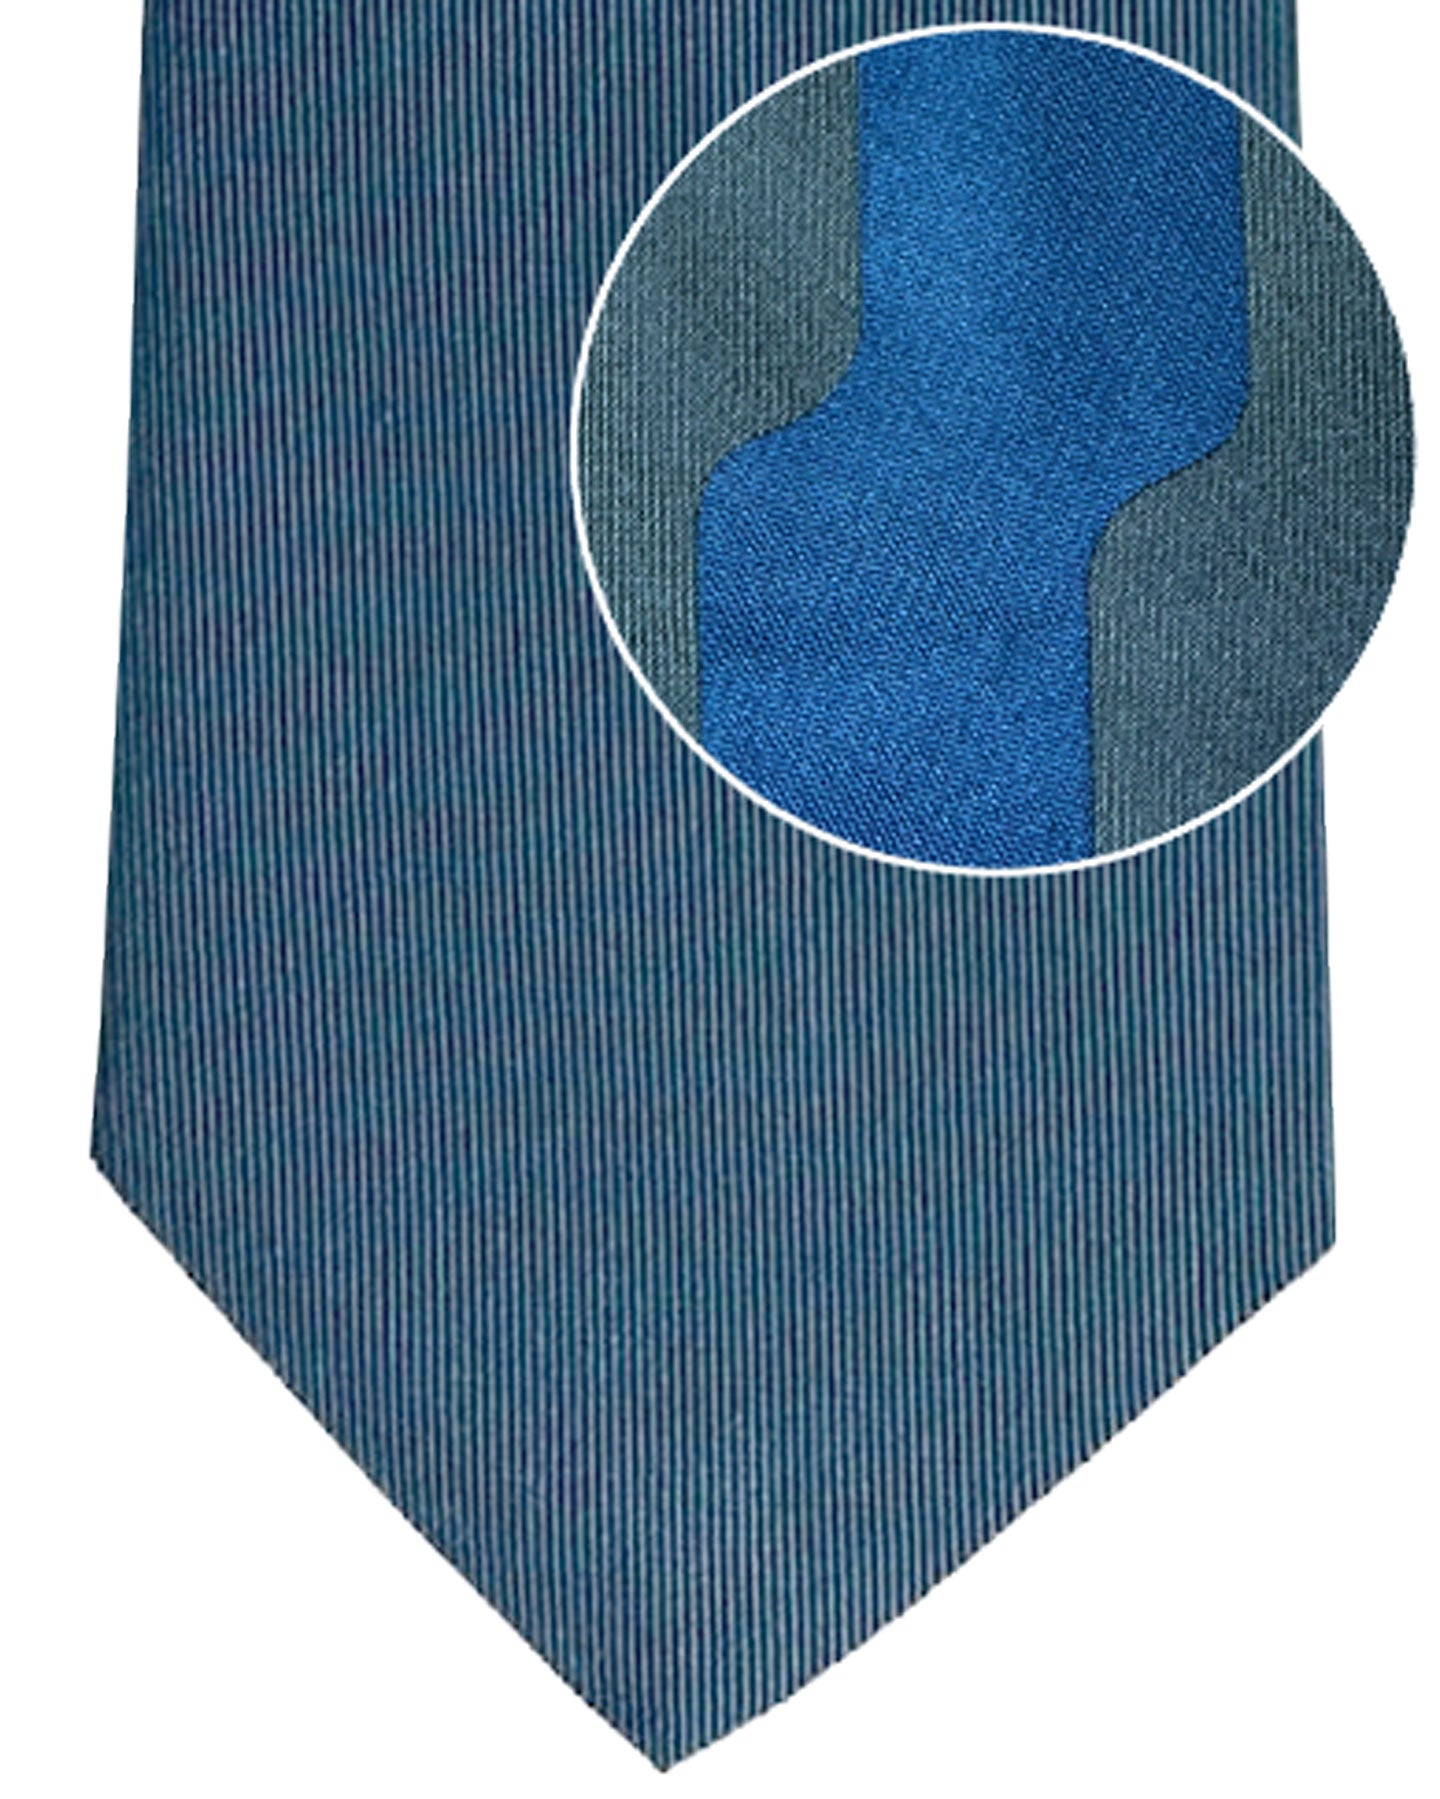 Gene Meyer Tie Gray Blue Design - Hand Made in Italy